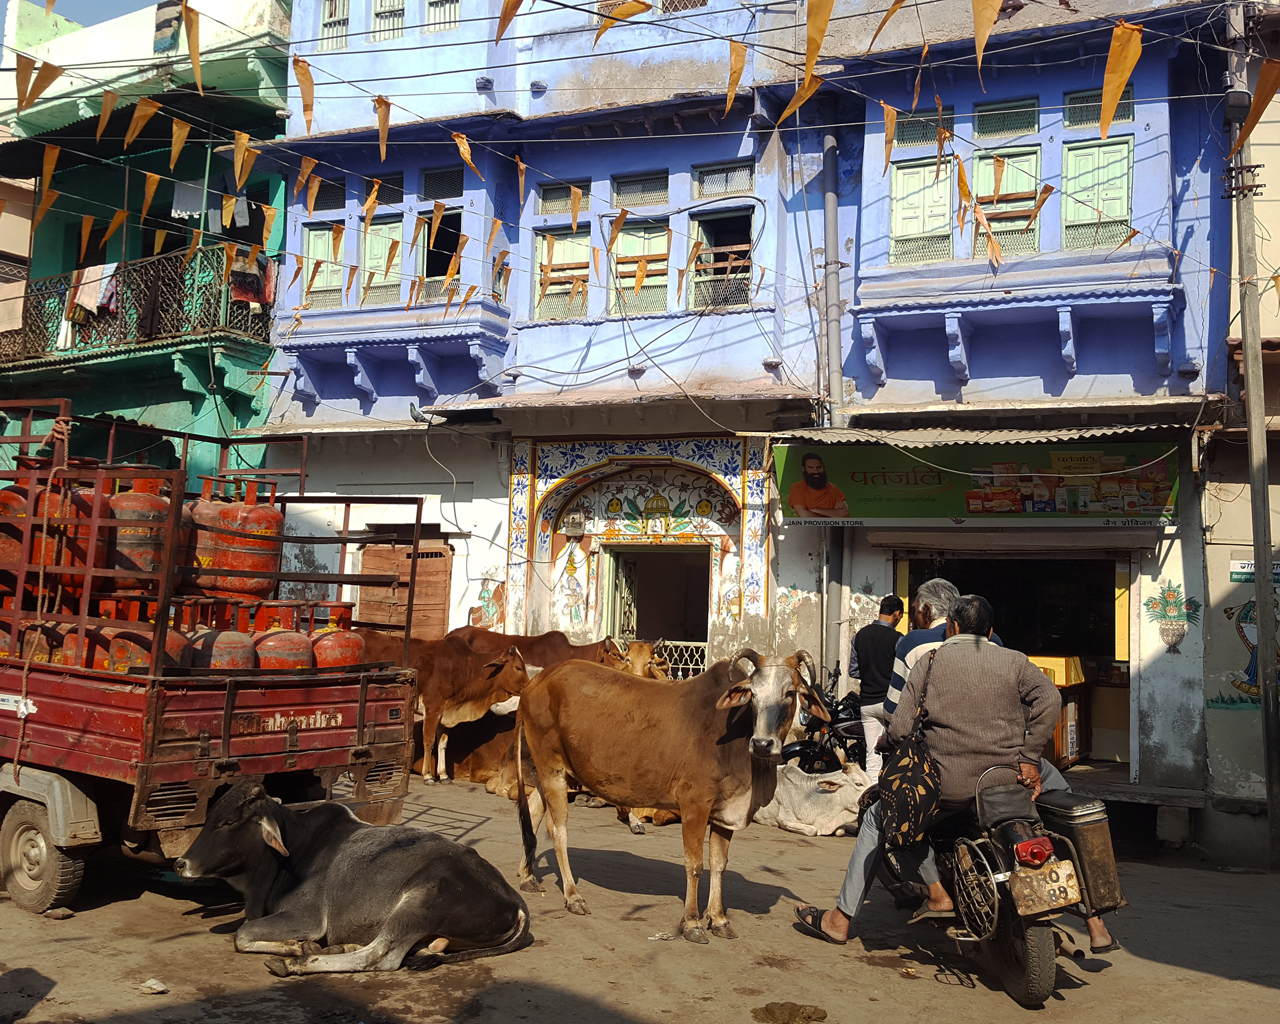 Cows in the street in Bundi, India